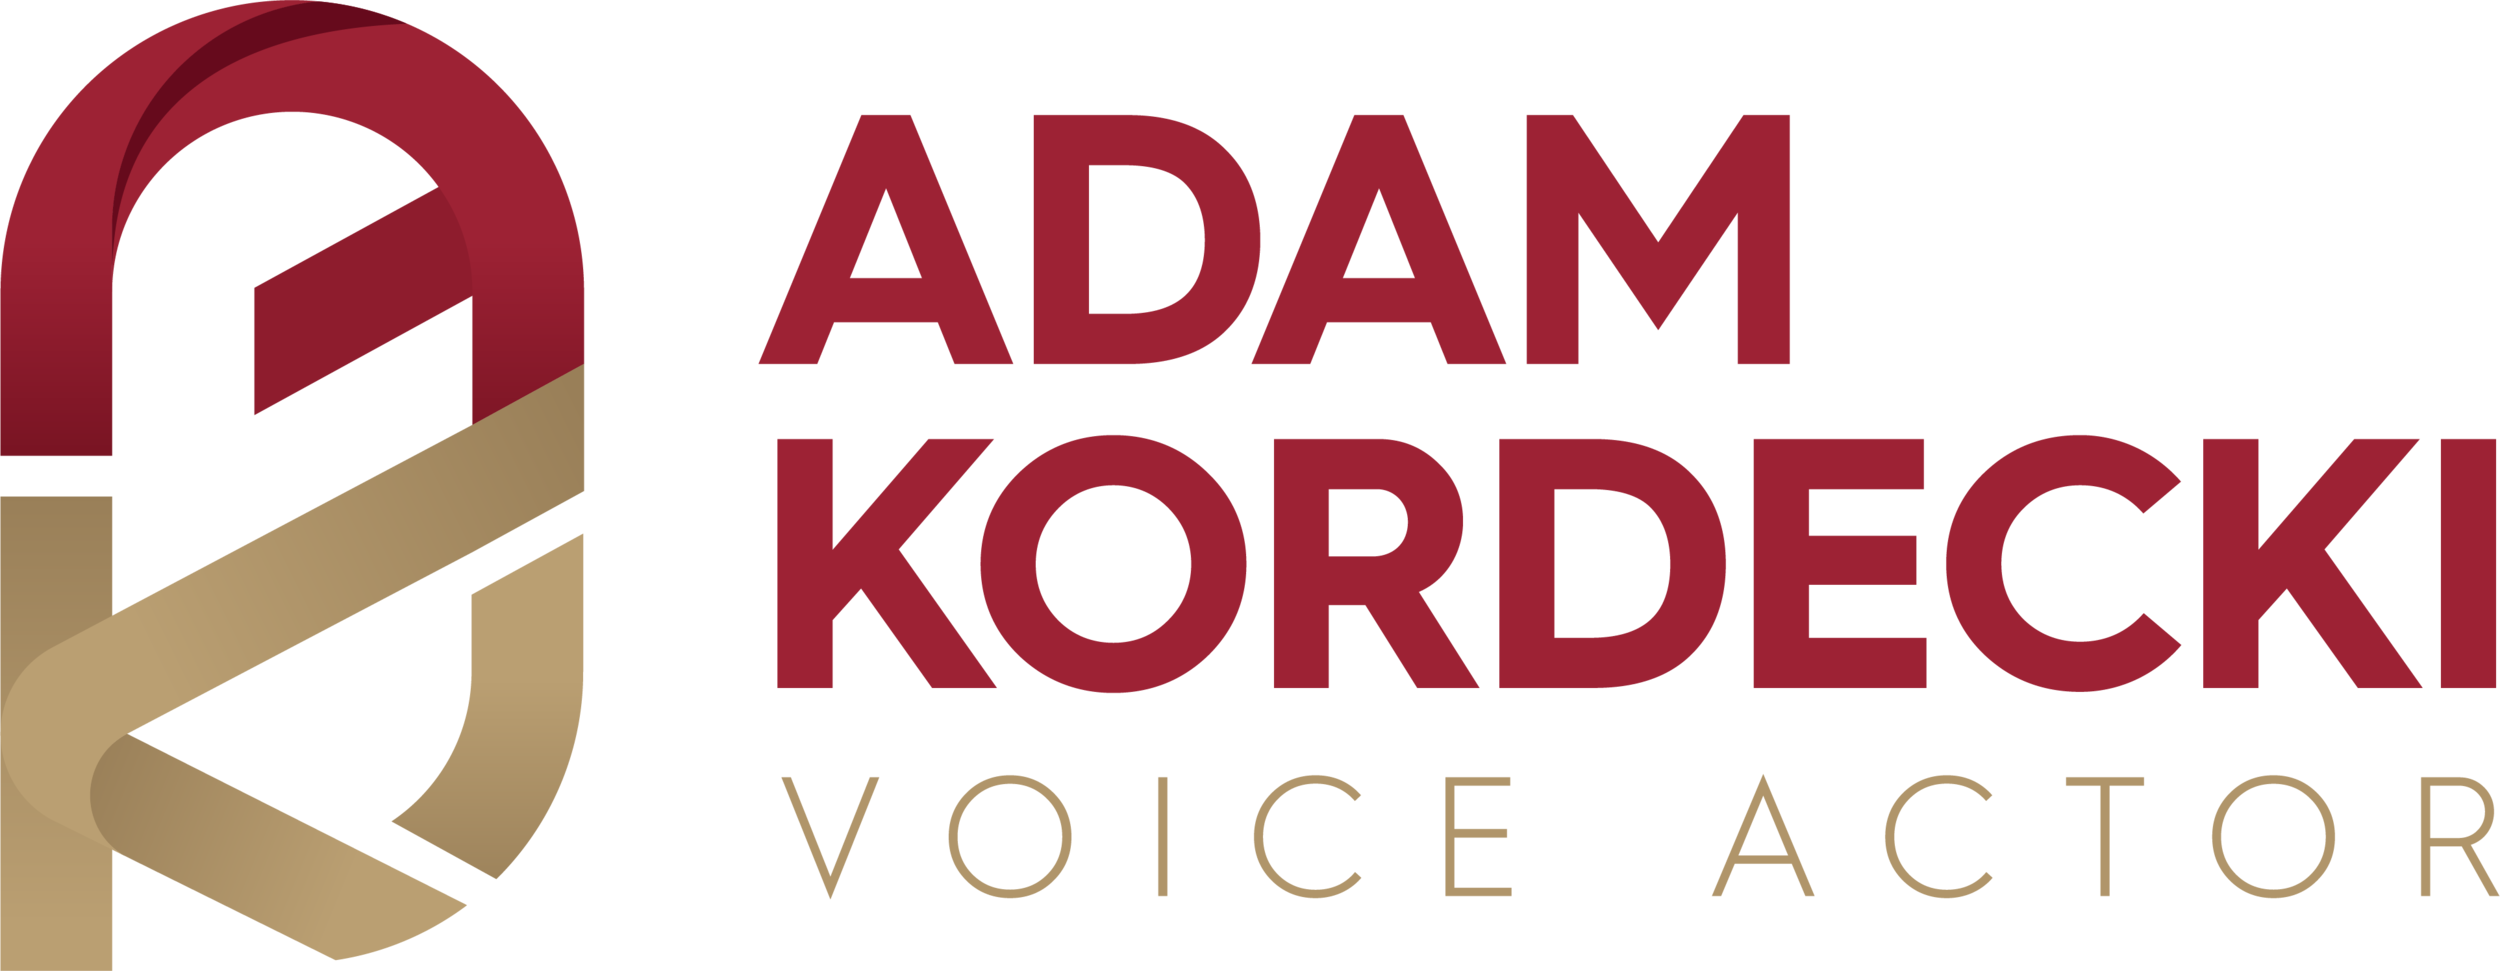 Adam Kordecki VO